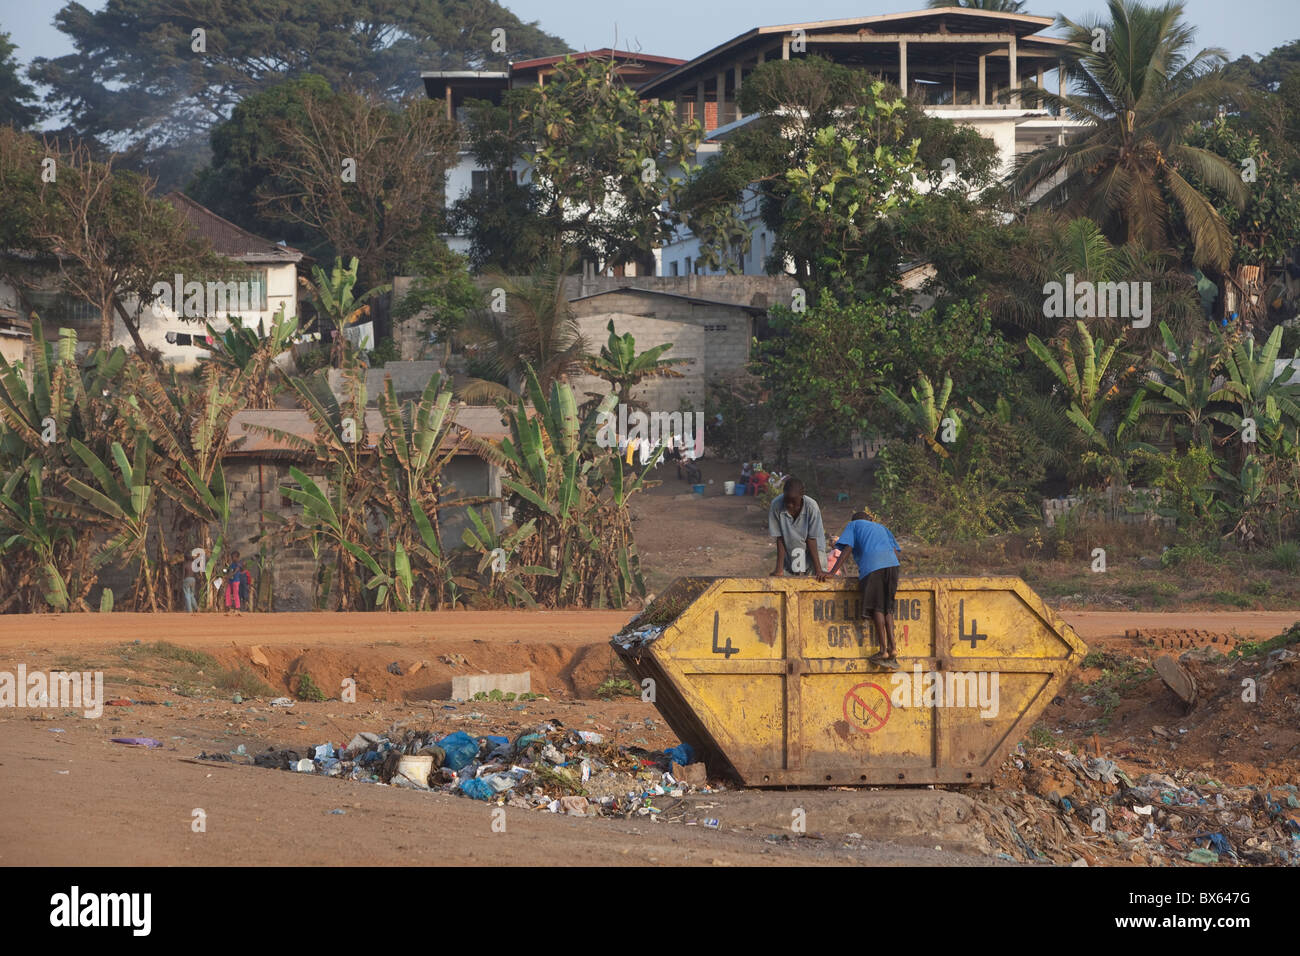 Stadtszene entlang am Meer zeigen Kinder graben durch Müll Müllcontainer. | Monrovia, Liberia, Westafrika. Stockfoto